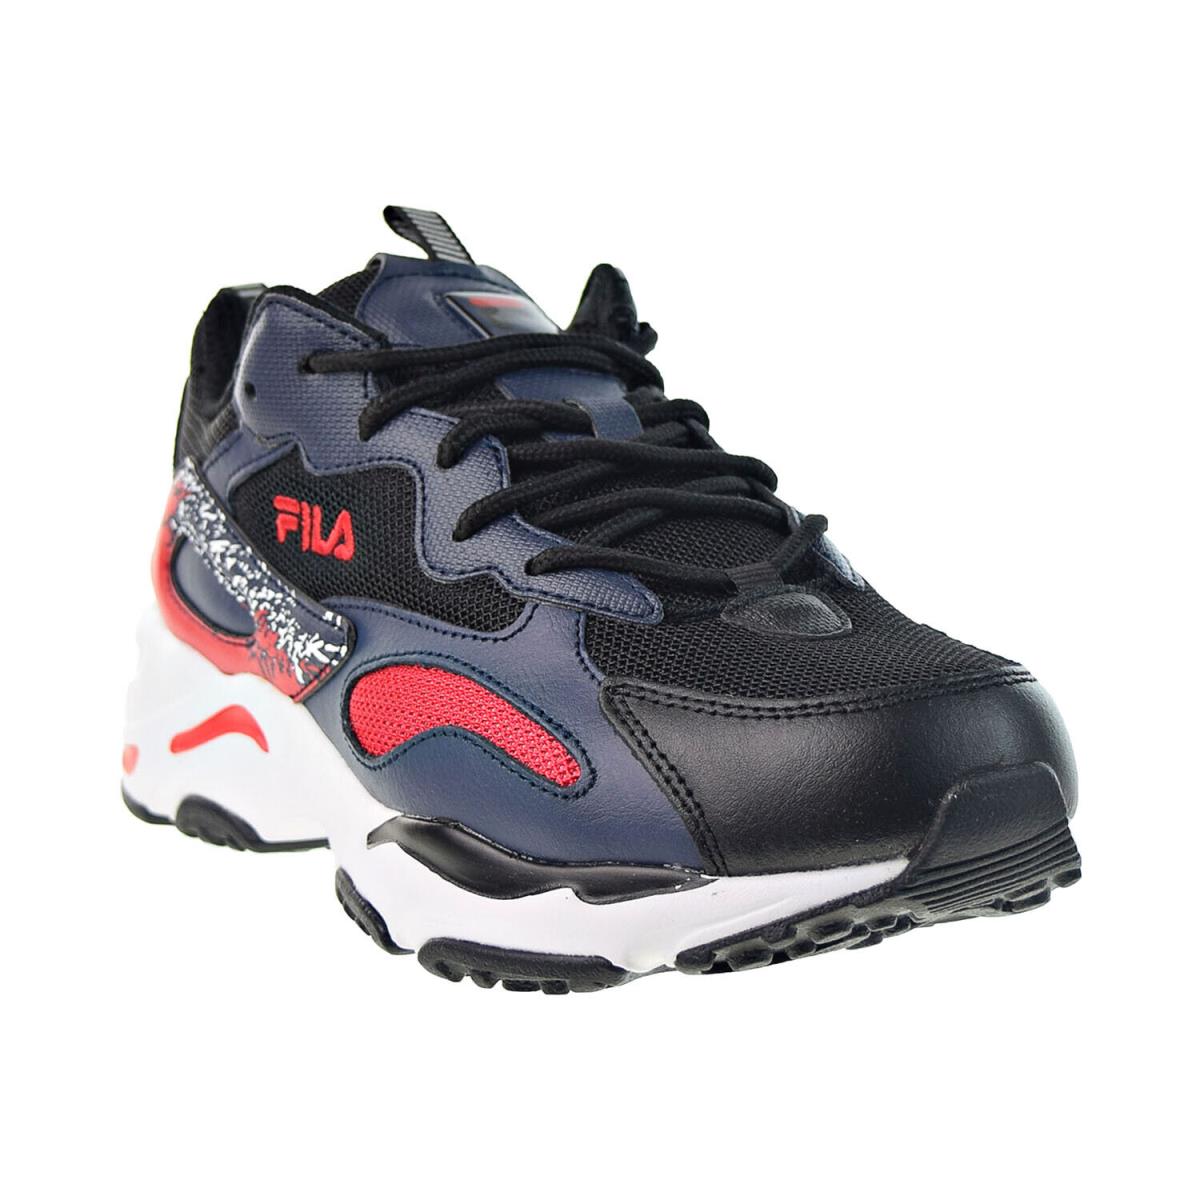 Fila Ray Tracer TR 2 Men`s Shoes Black-white-blue-red 1RM01230-018 - Black-White-Blue-Red